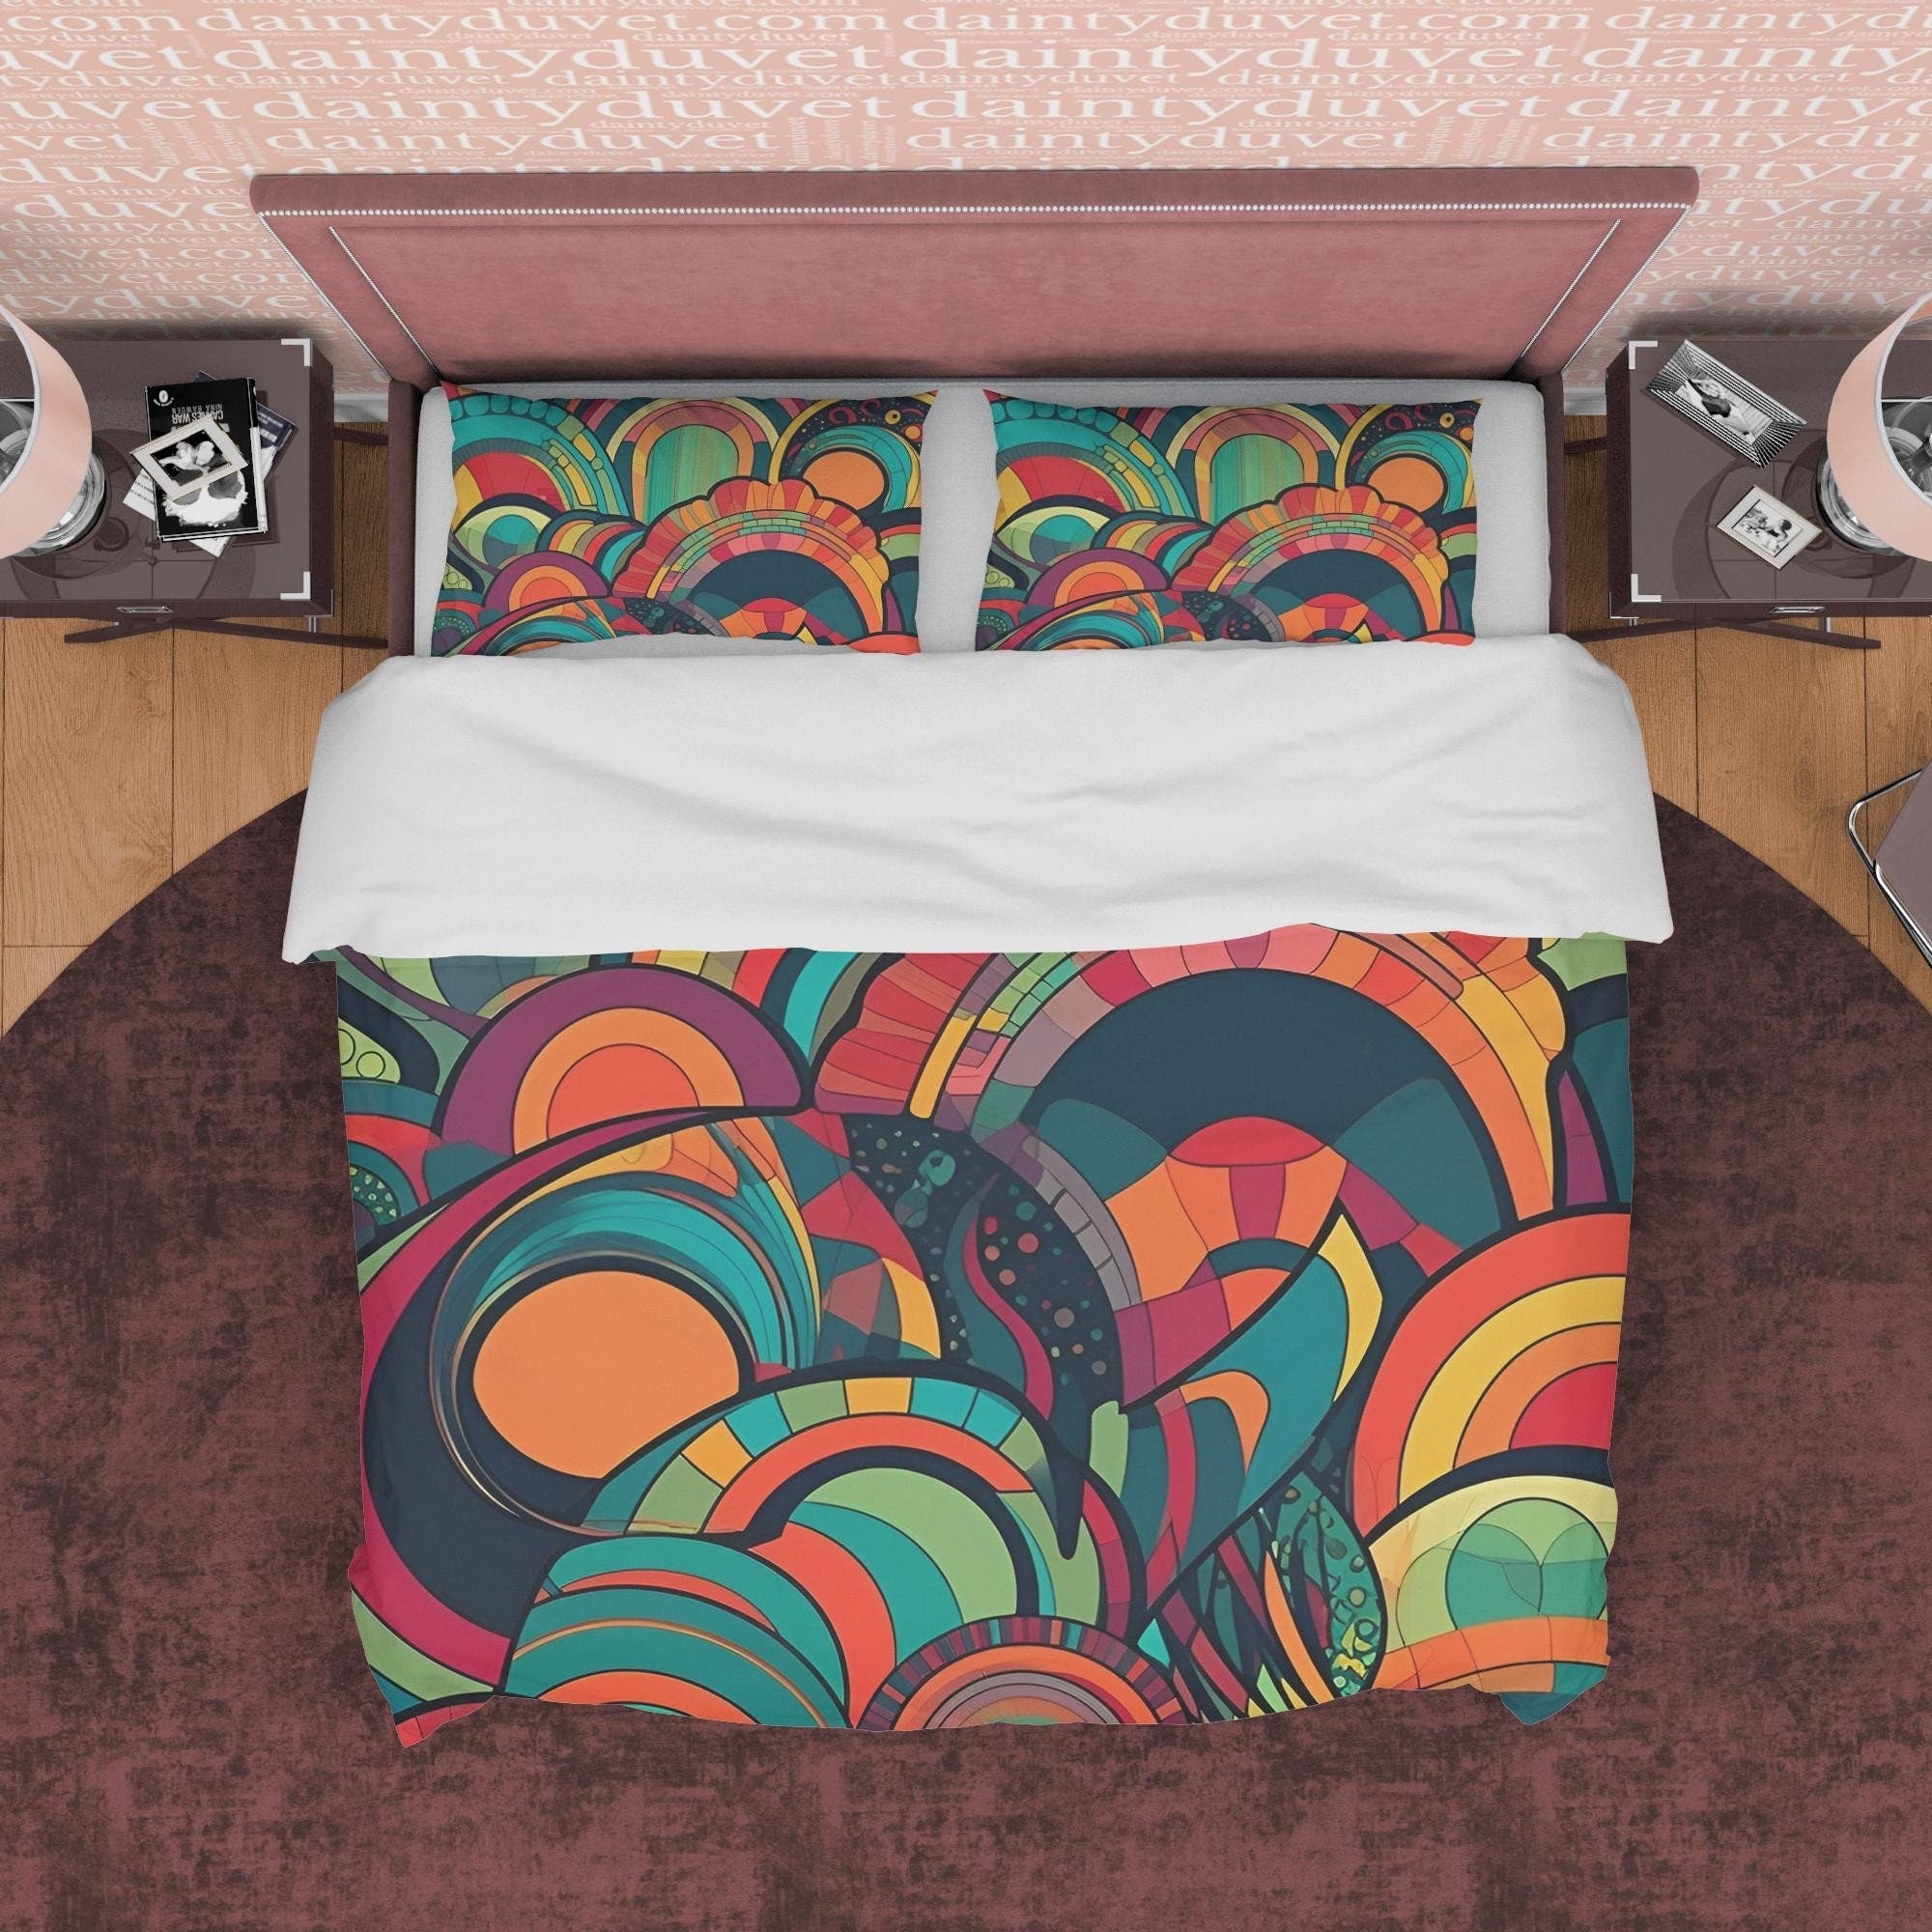 Abstract Design Duvet Cover Retro Bedding Set, Colorful Blanket Cover, 70's Nostalgia Quilt Cover, Unique Pattern Bedspread, Zipper Bedding